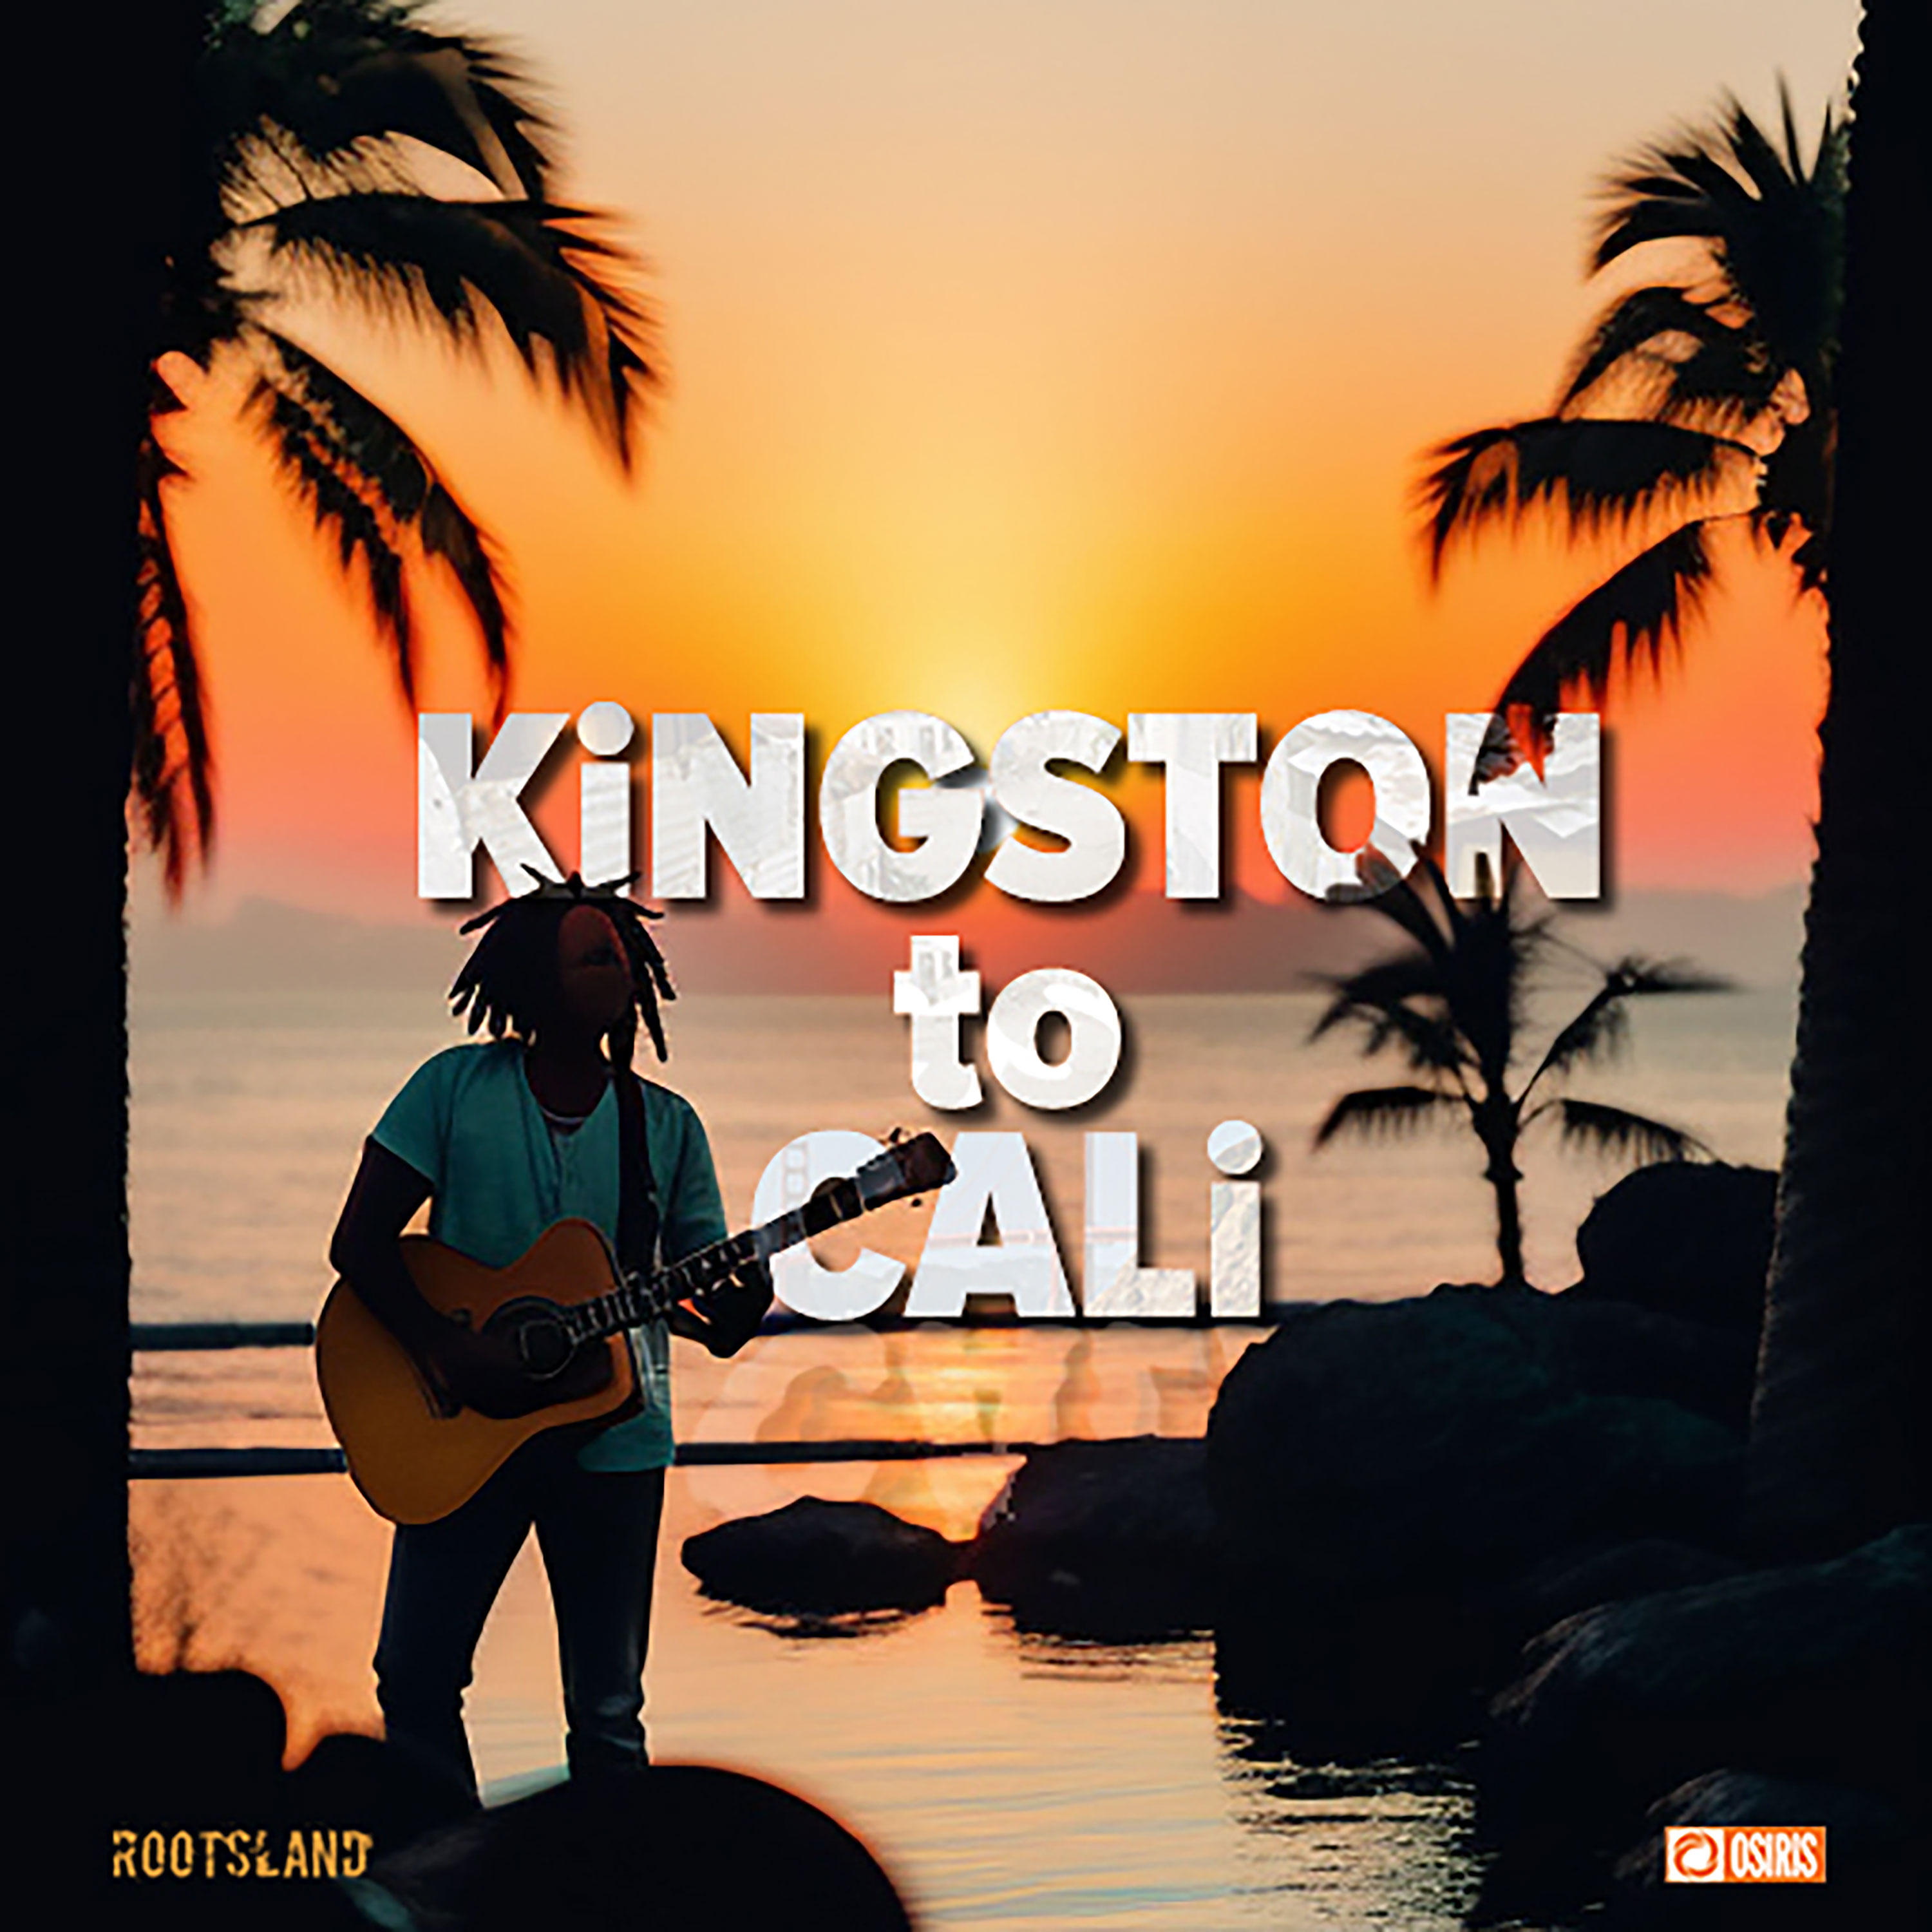 Kingston to Cali "Reggae's Journey West"